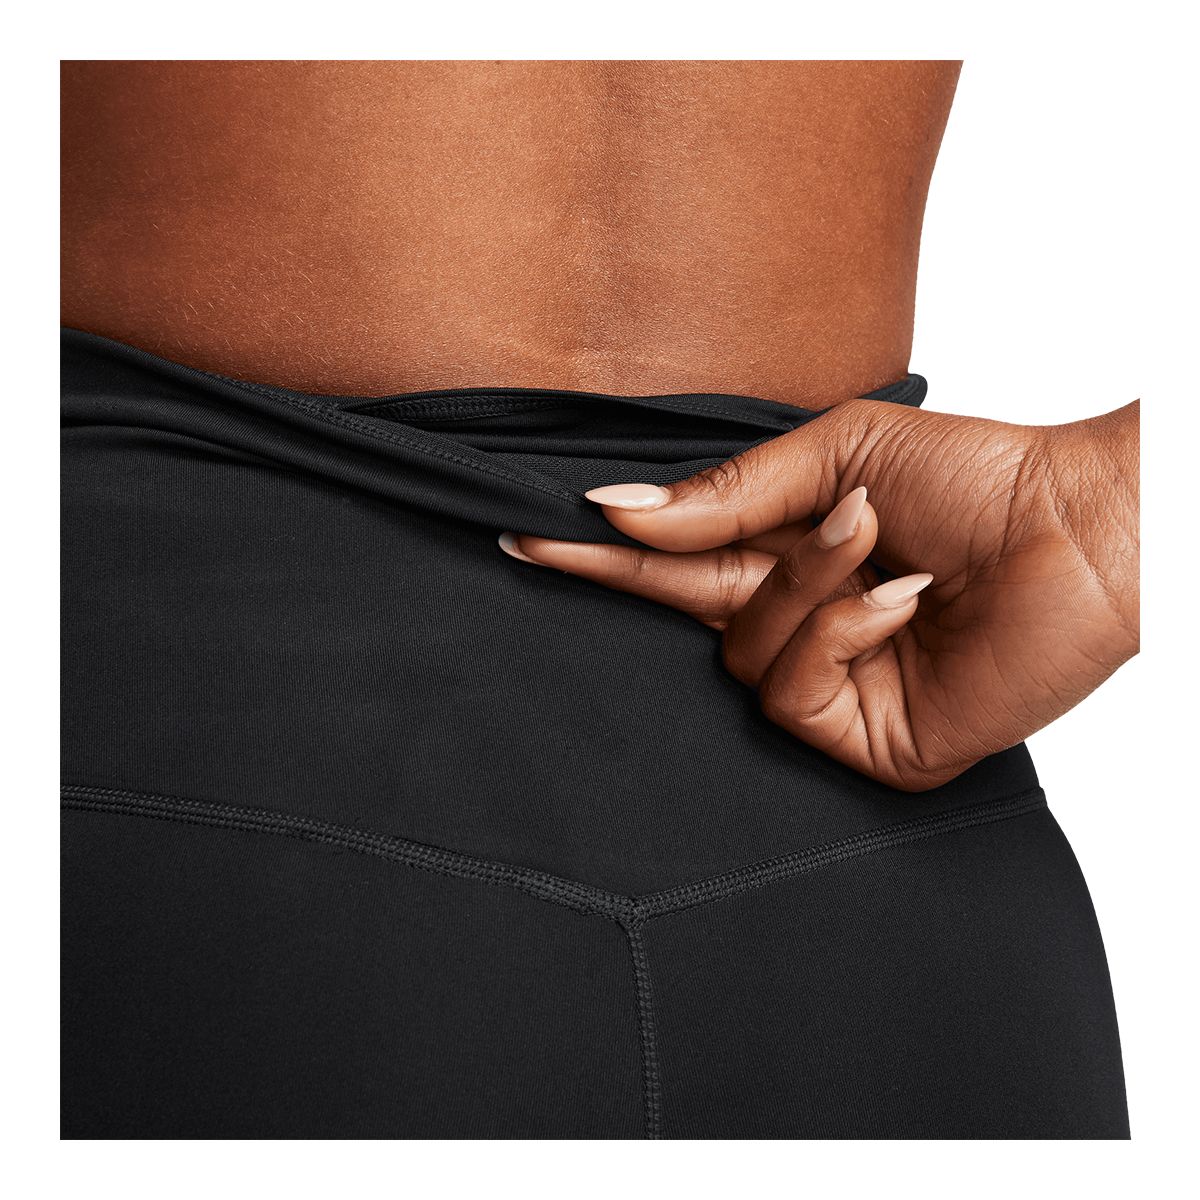 Nike Black DRI-FIT leggings - $25 (54% Off Retail) - From Kristin